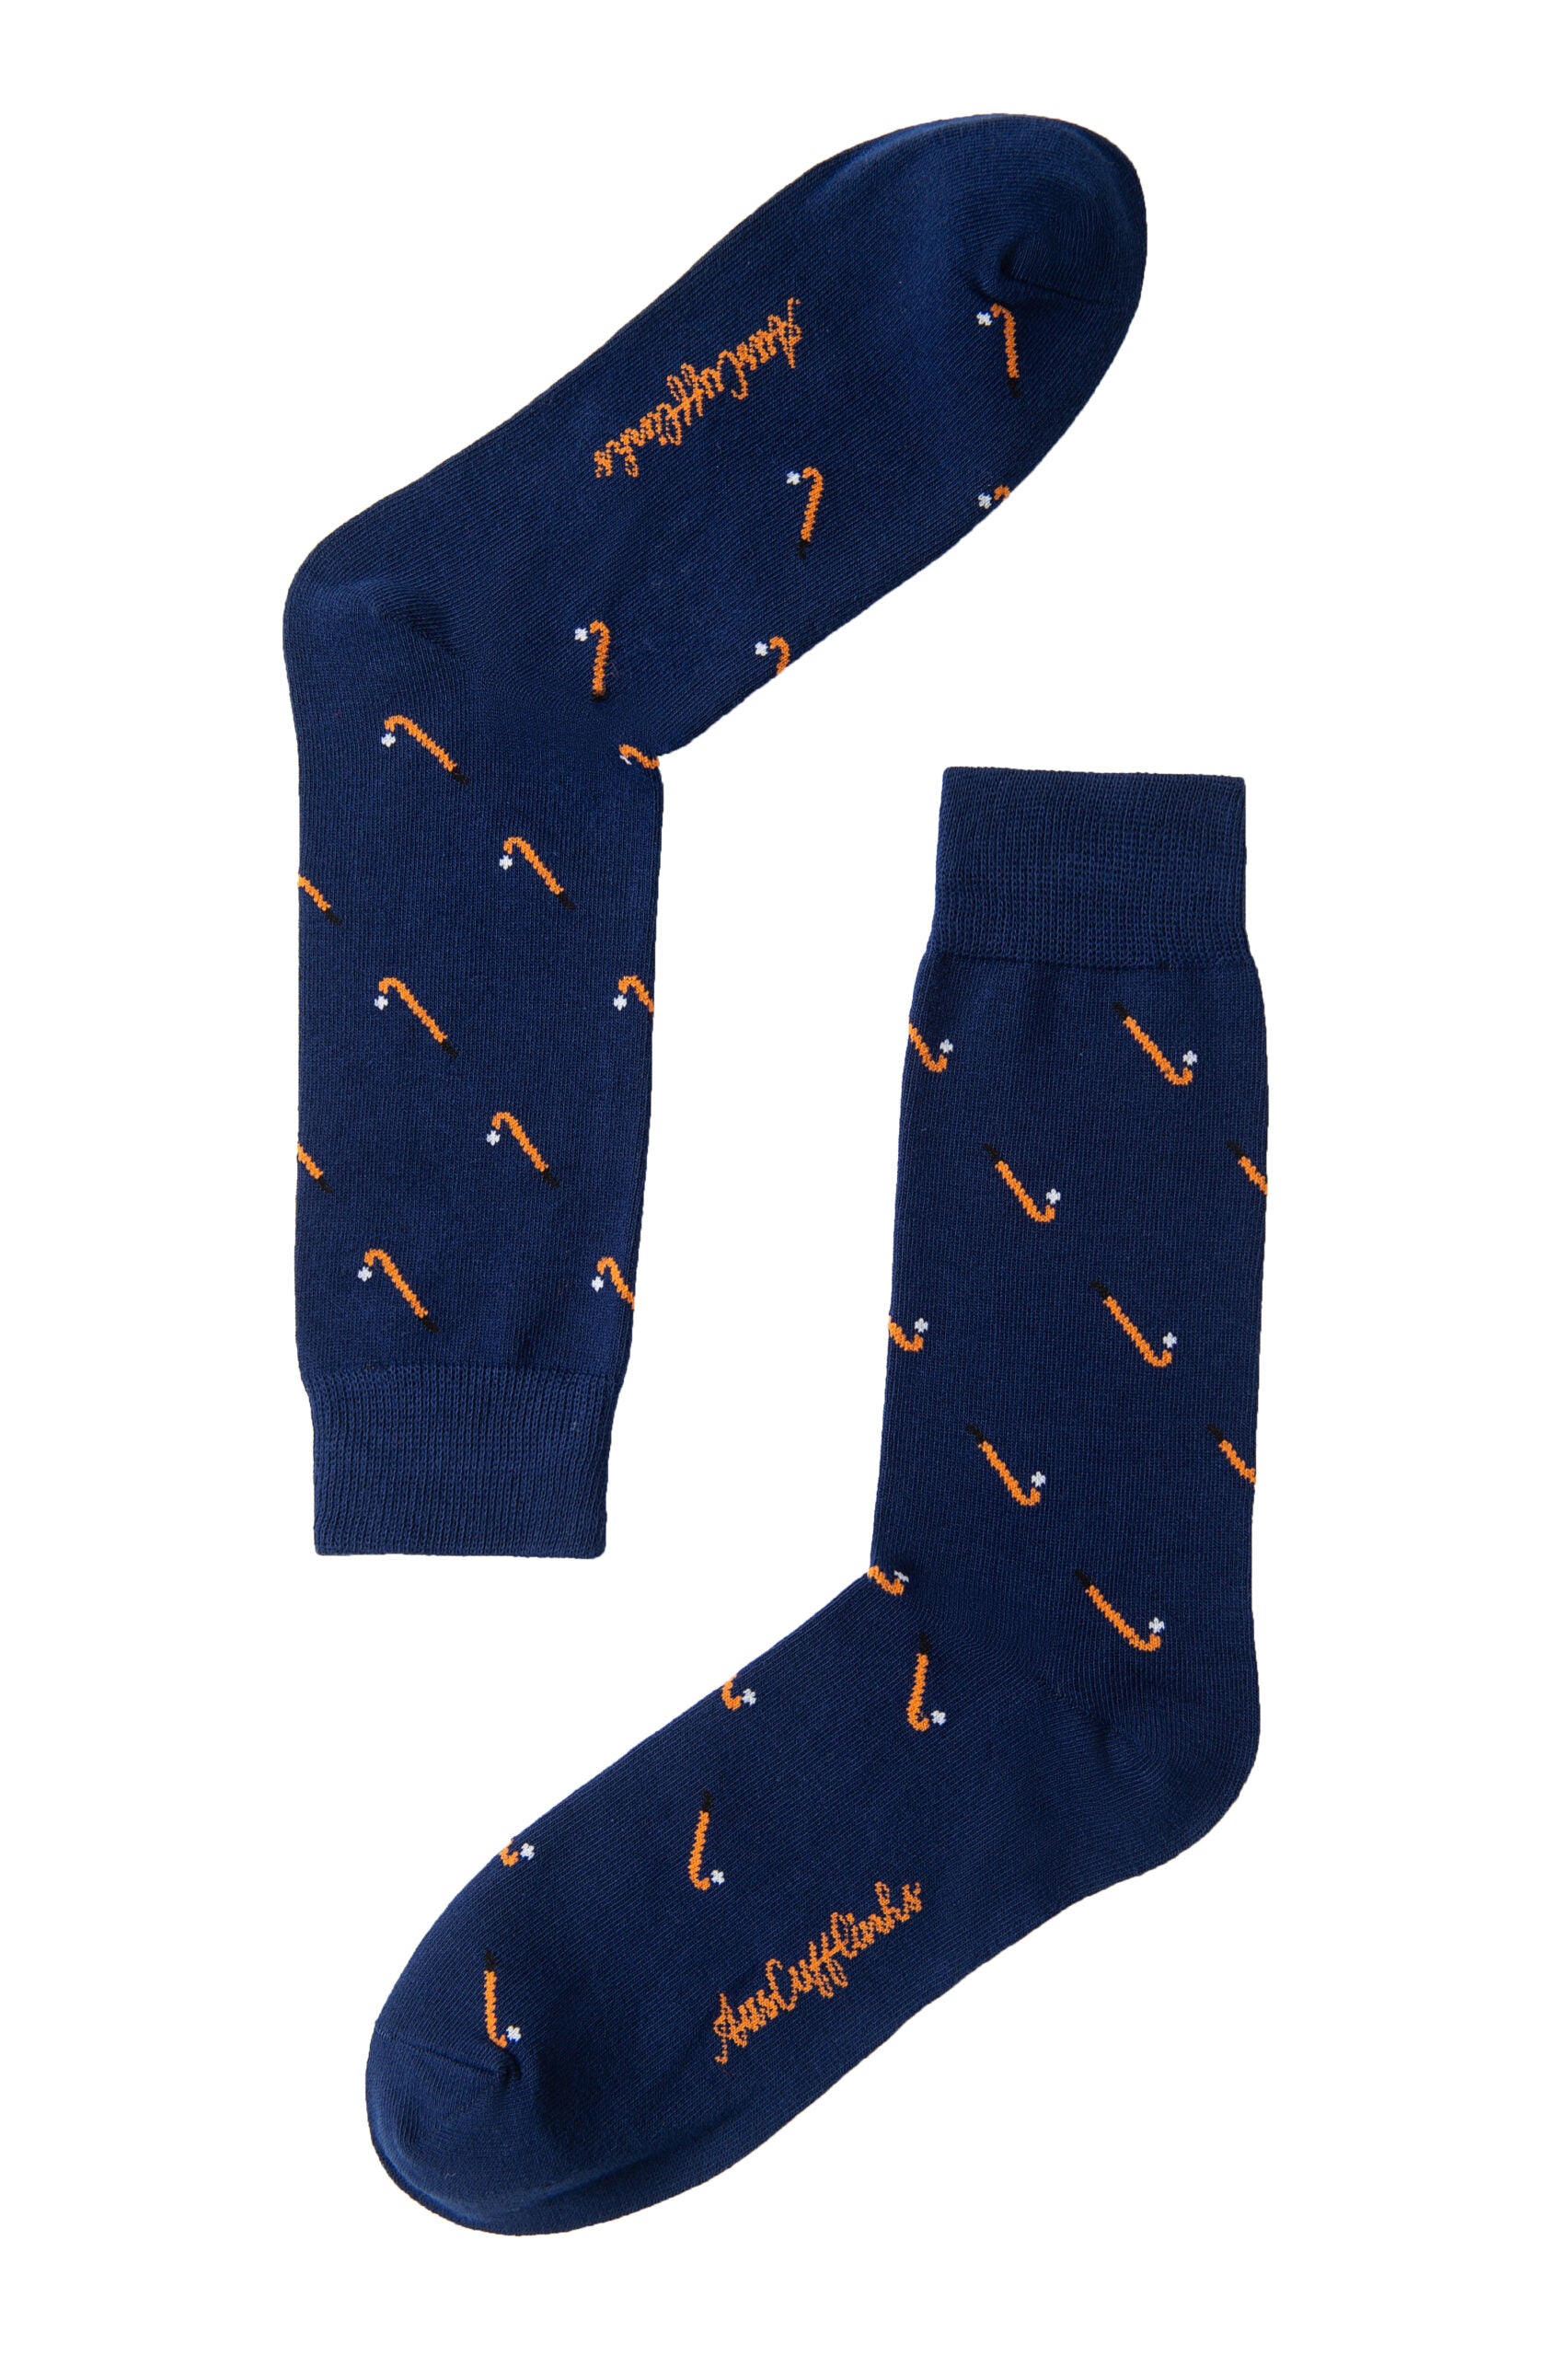 A pair of Field Hockey Socks with orange arrows on them.